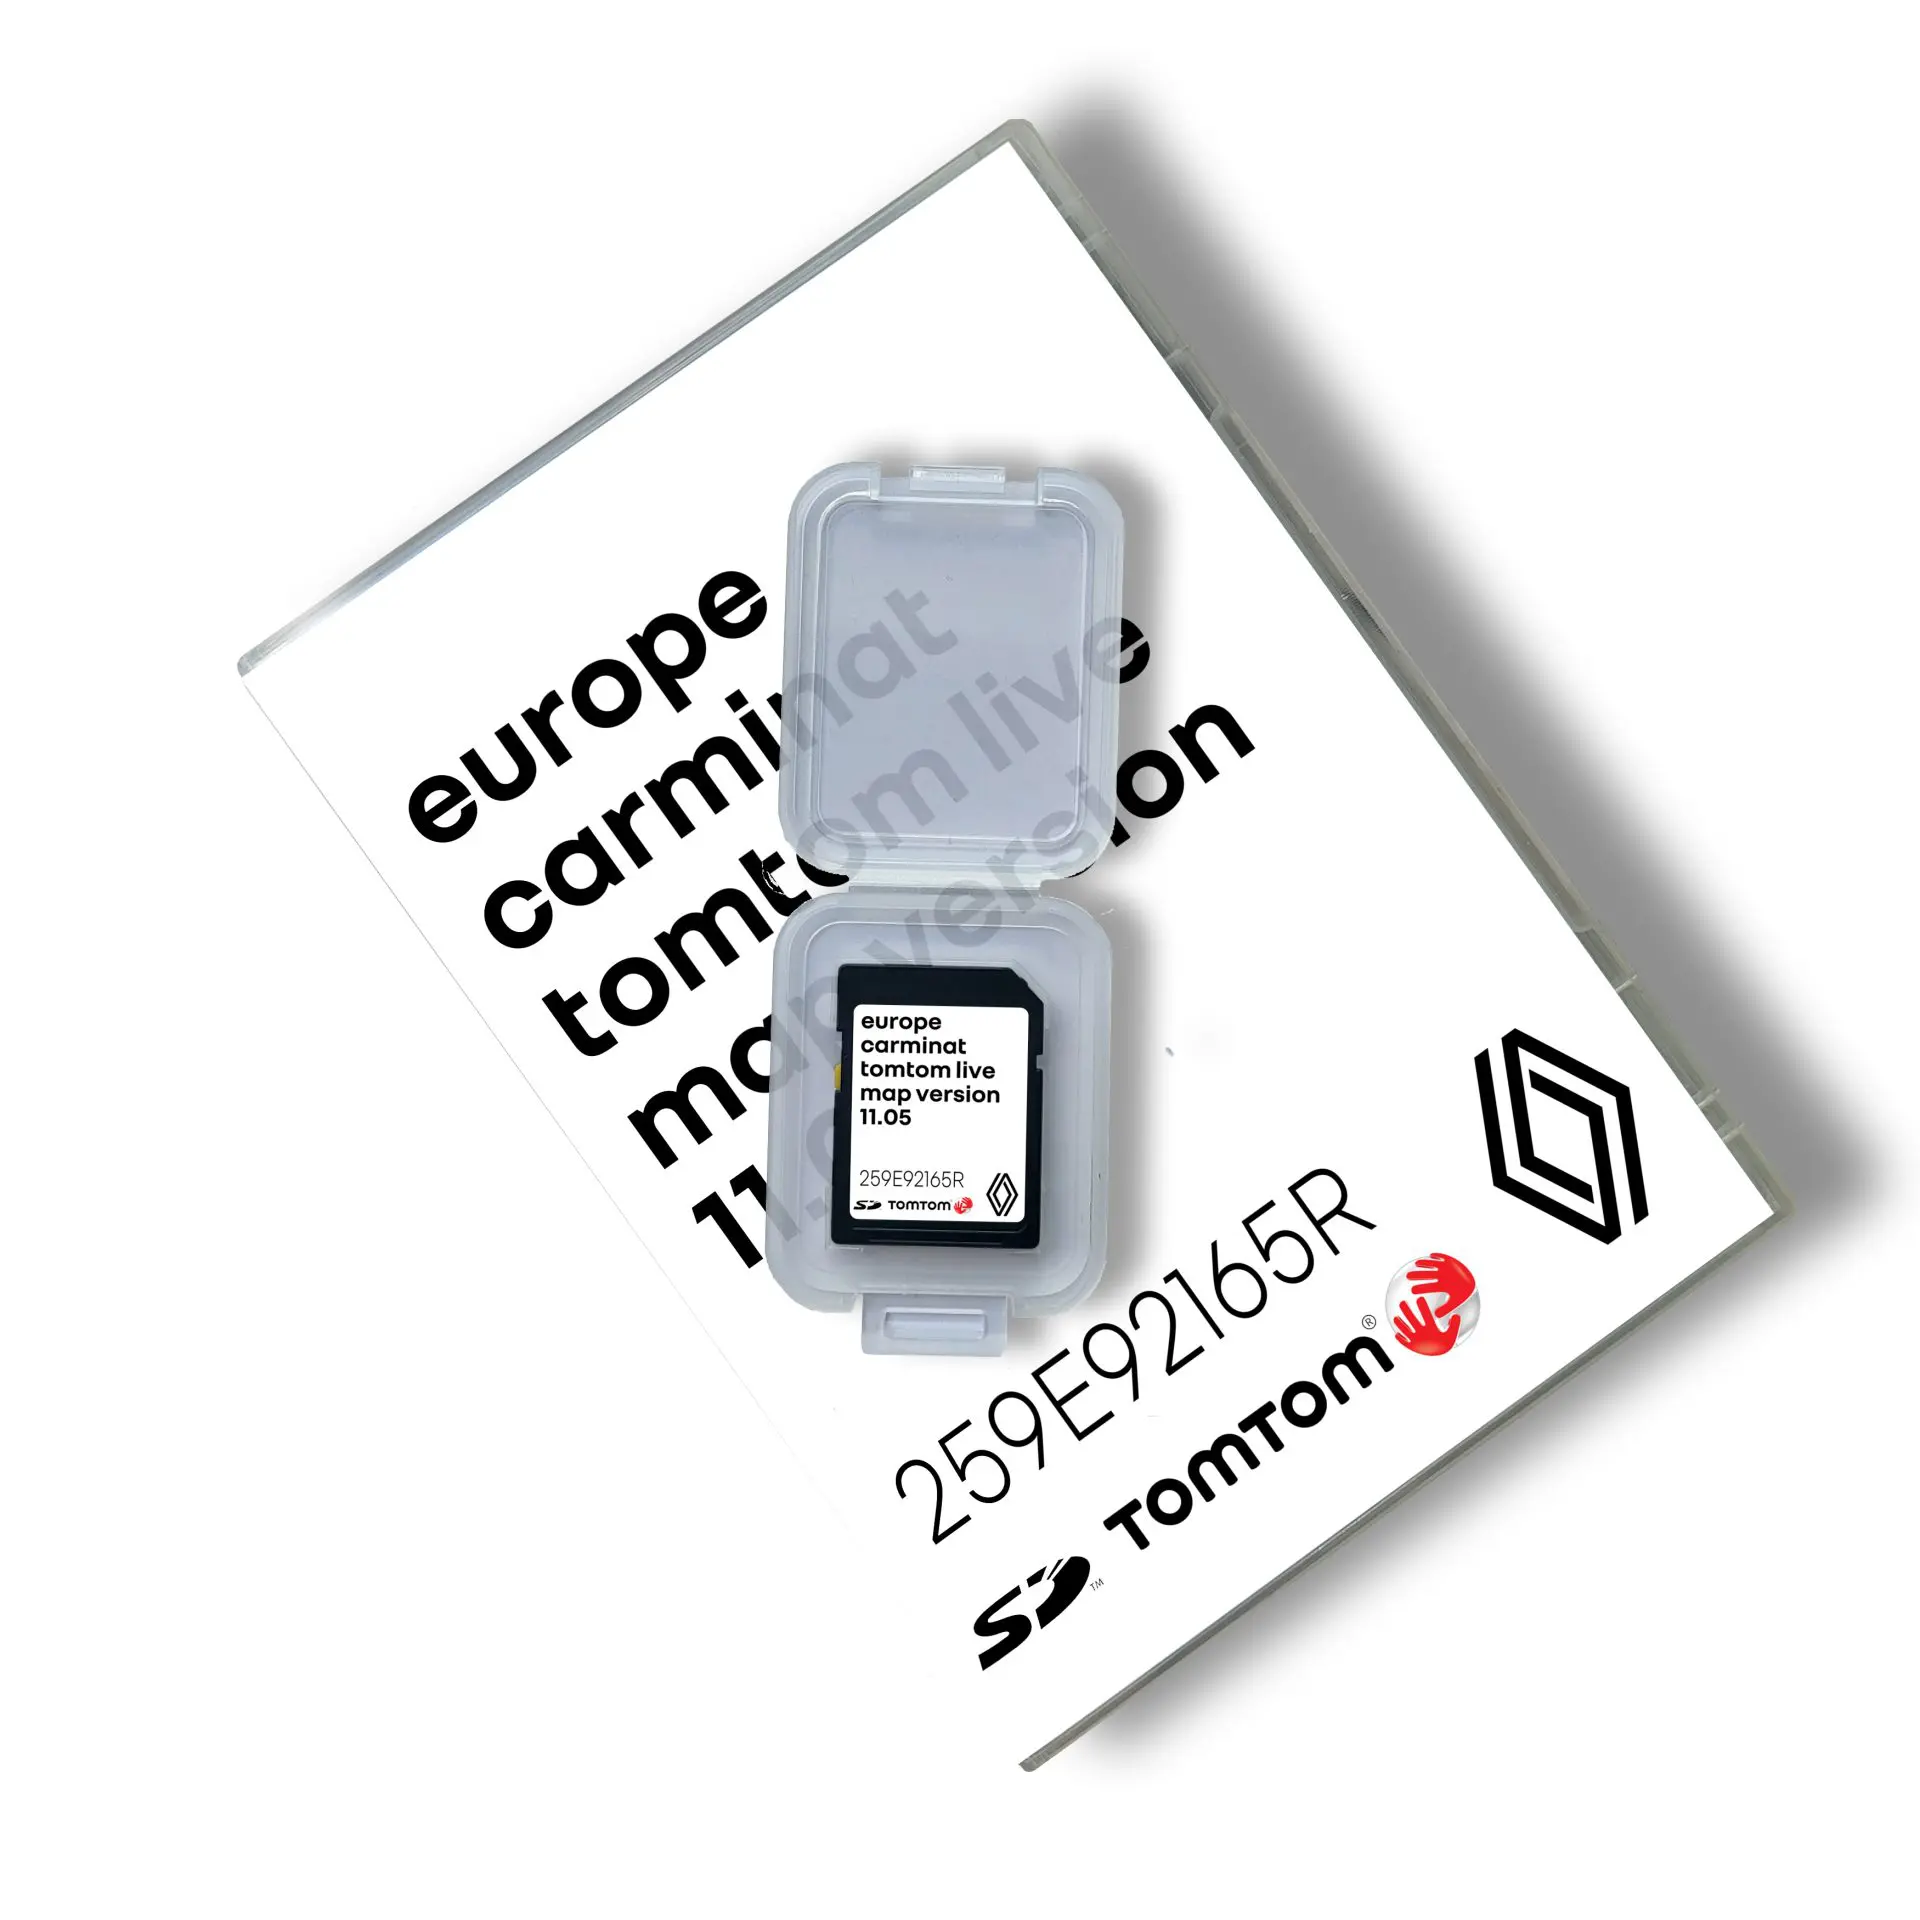 Renault Carminat TomTom Live 11.05 SD Card Europe